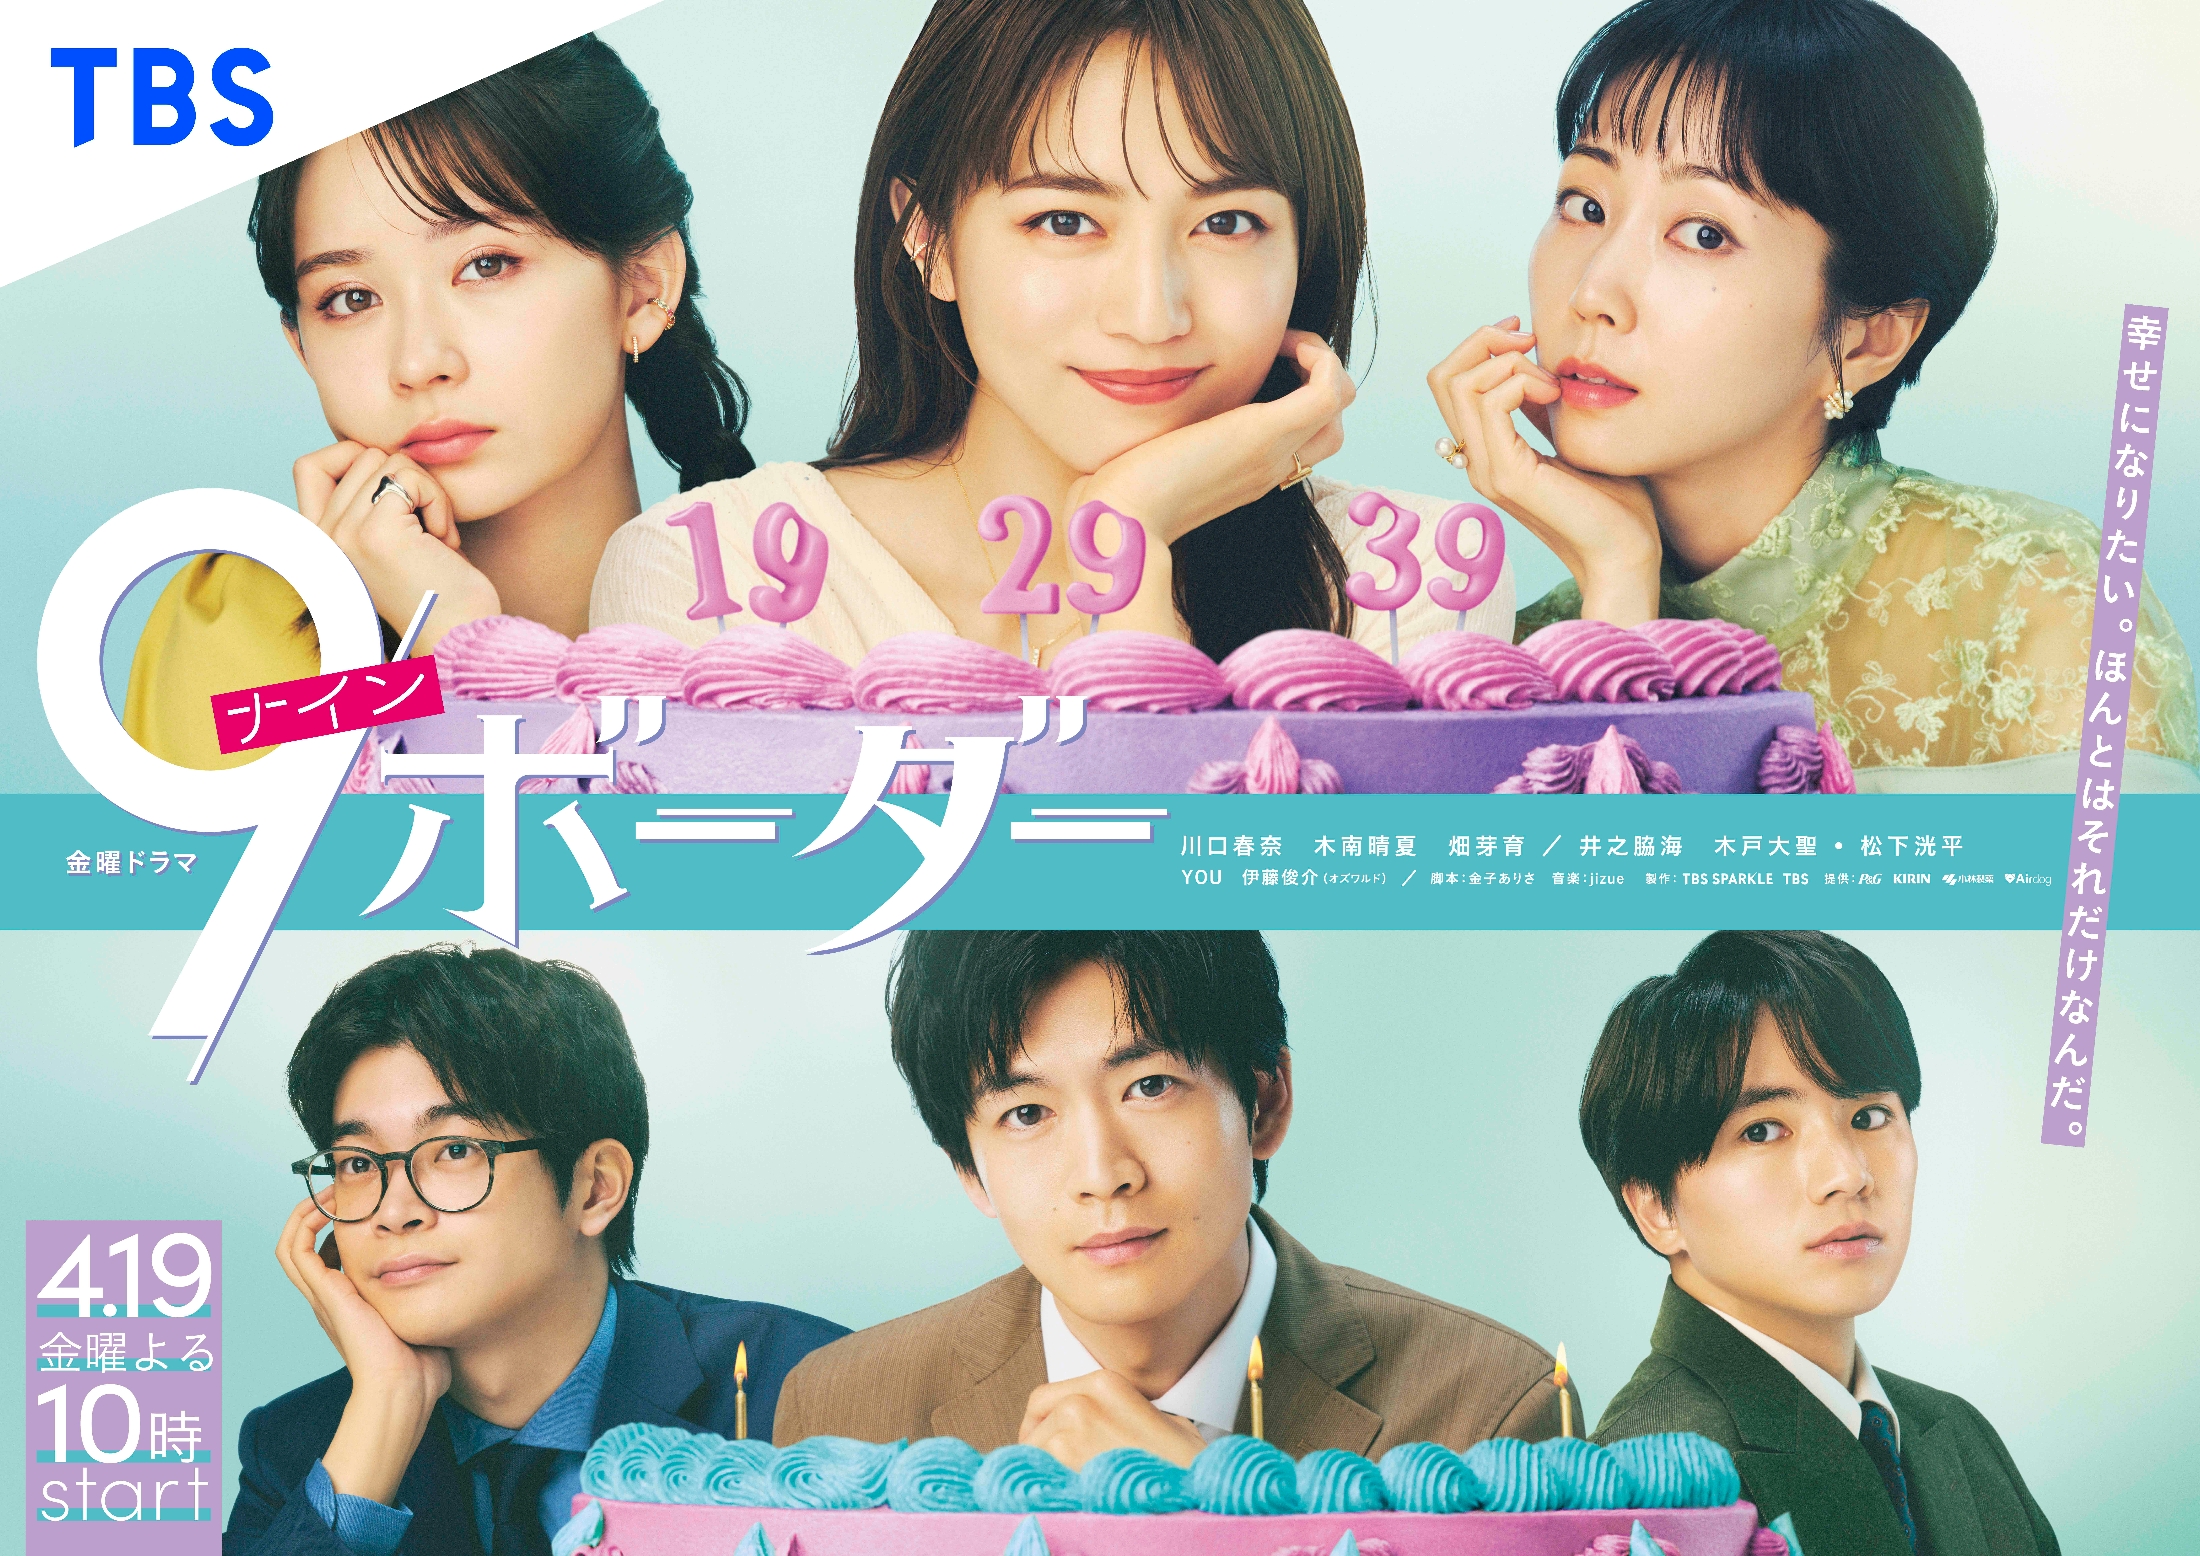 SEKAI NO OWARIの新曲“Romantic”が川口春奈主演ドラマ『9ボーダー 